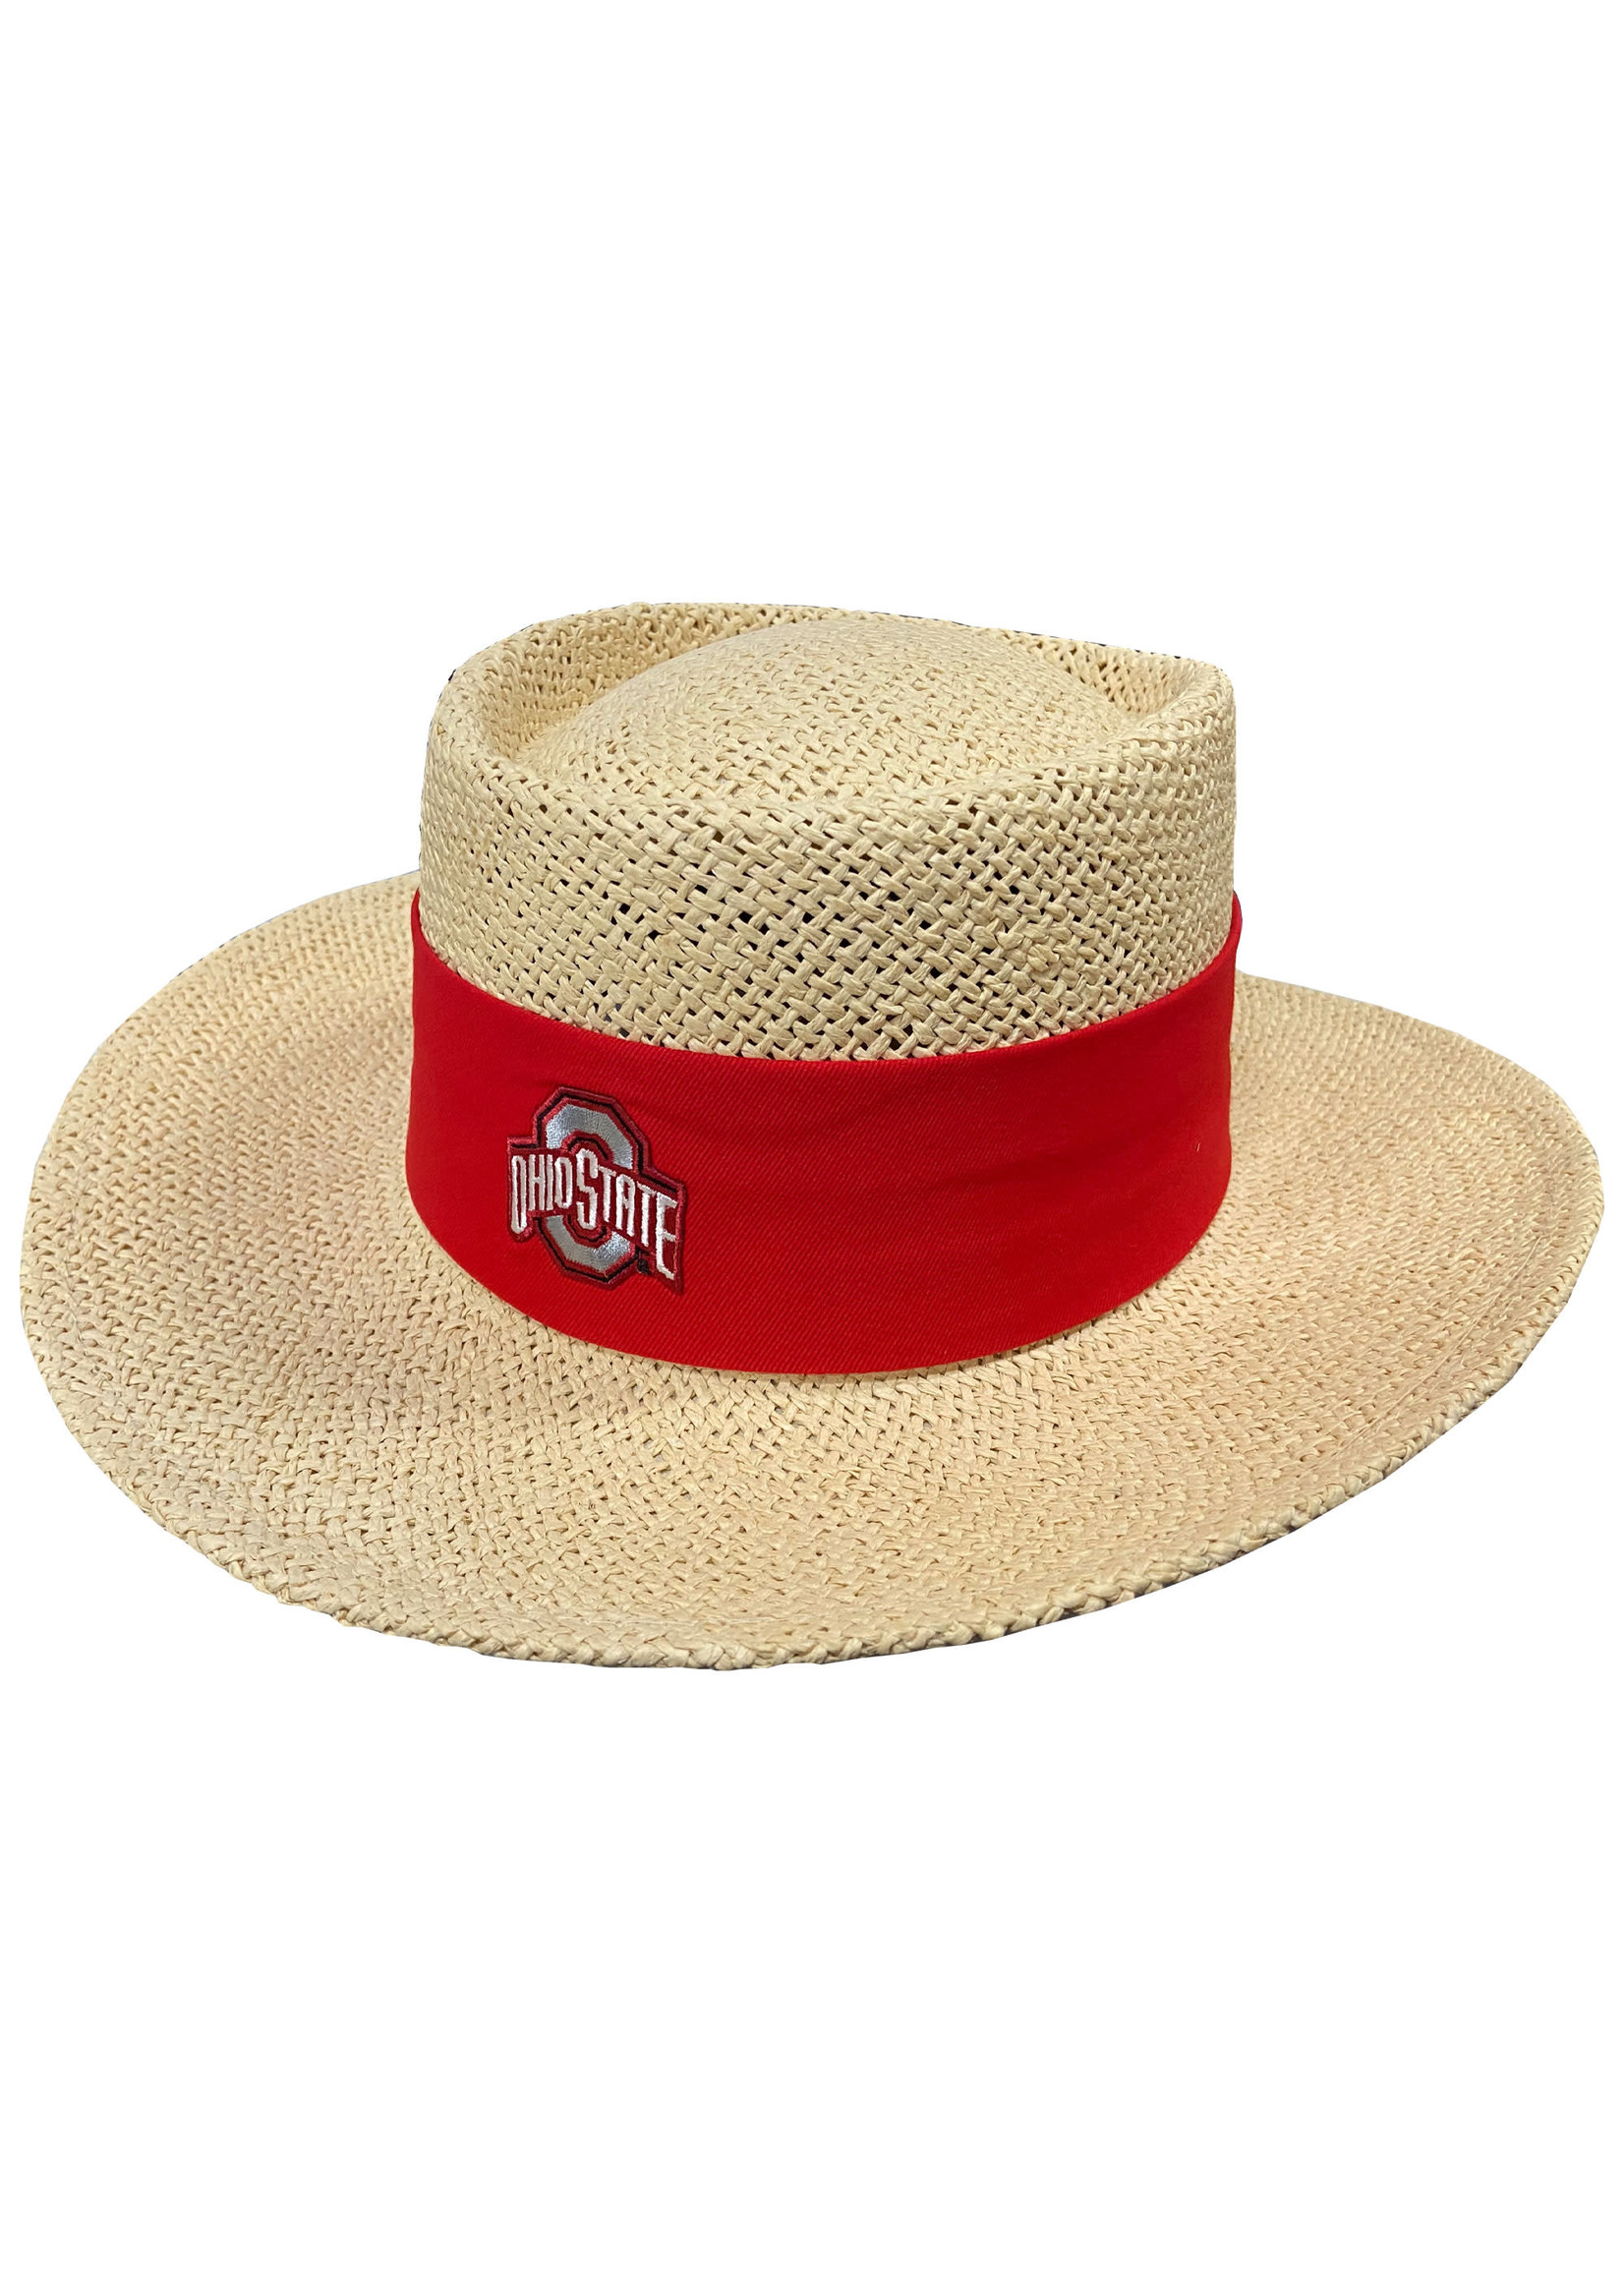 Ohio State Buckeyes Straw Gambler Hat